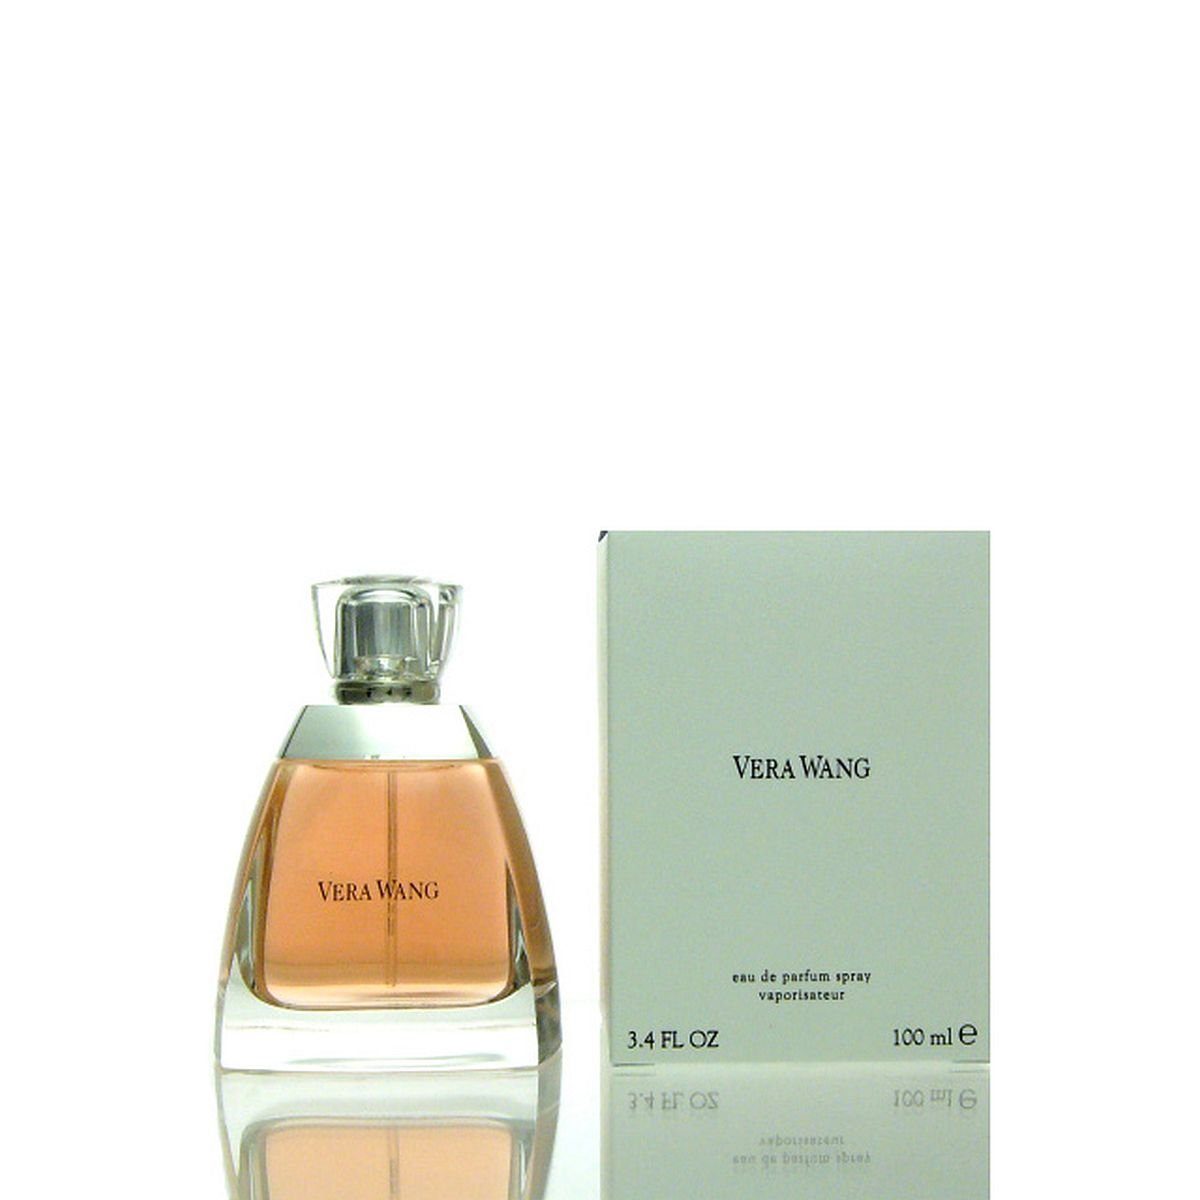 Wang for Wang Parfum Eau Vera de Vera 100 Woman de ml Eau Parfum